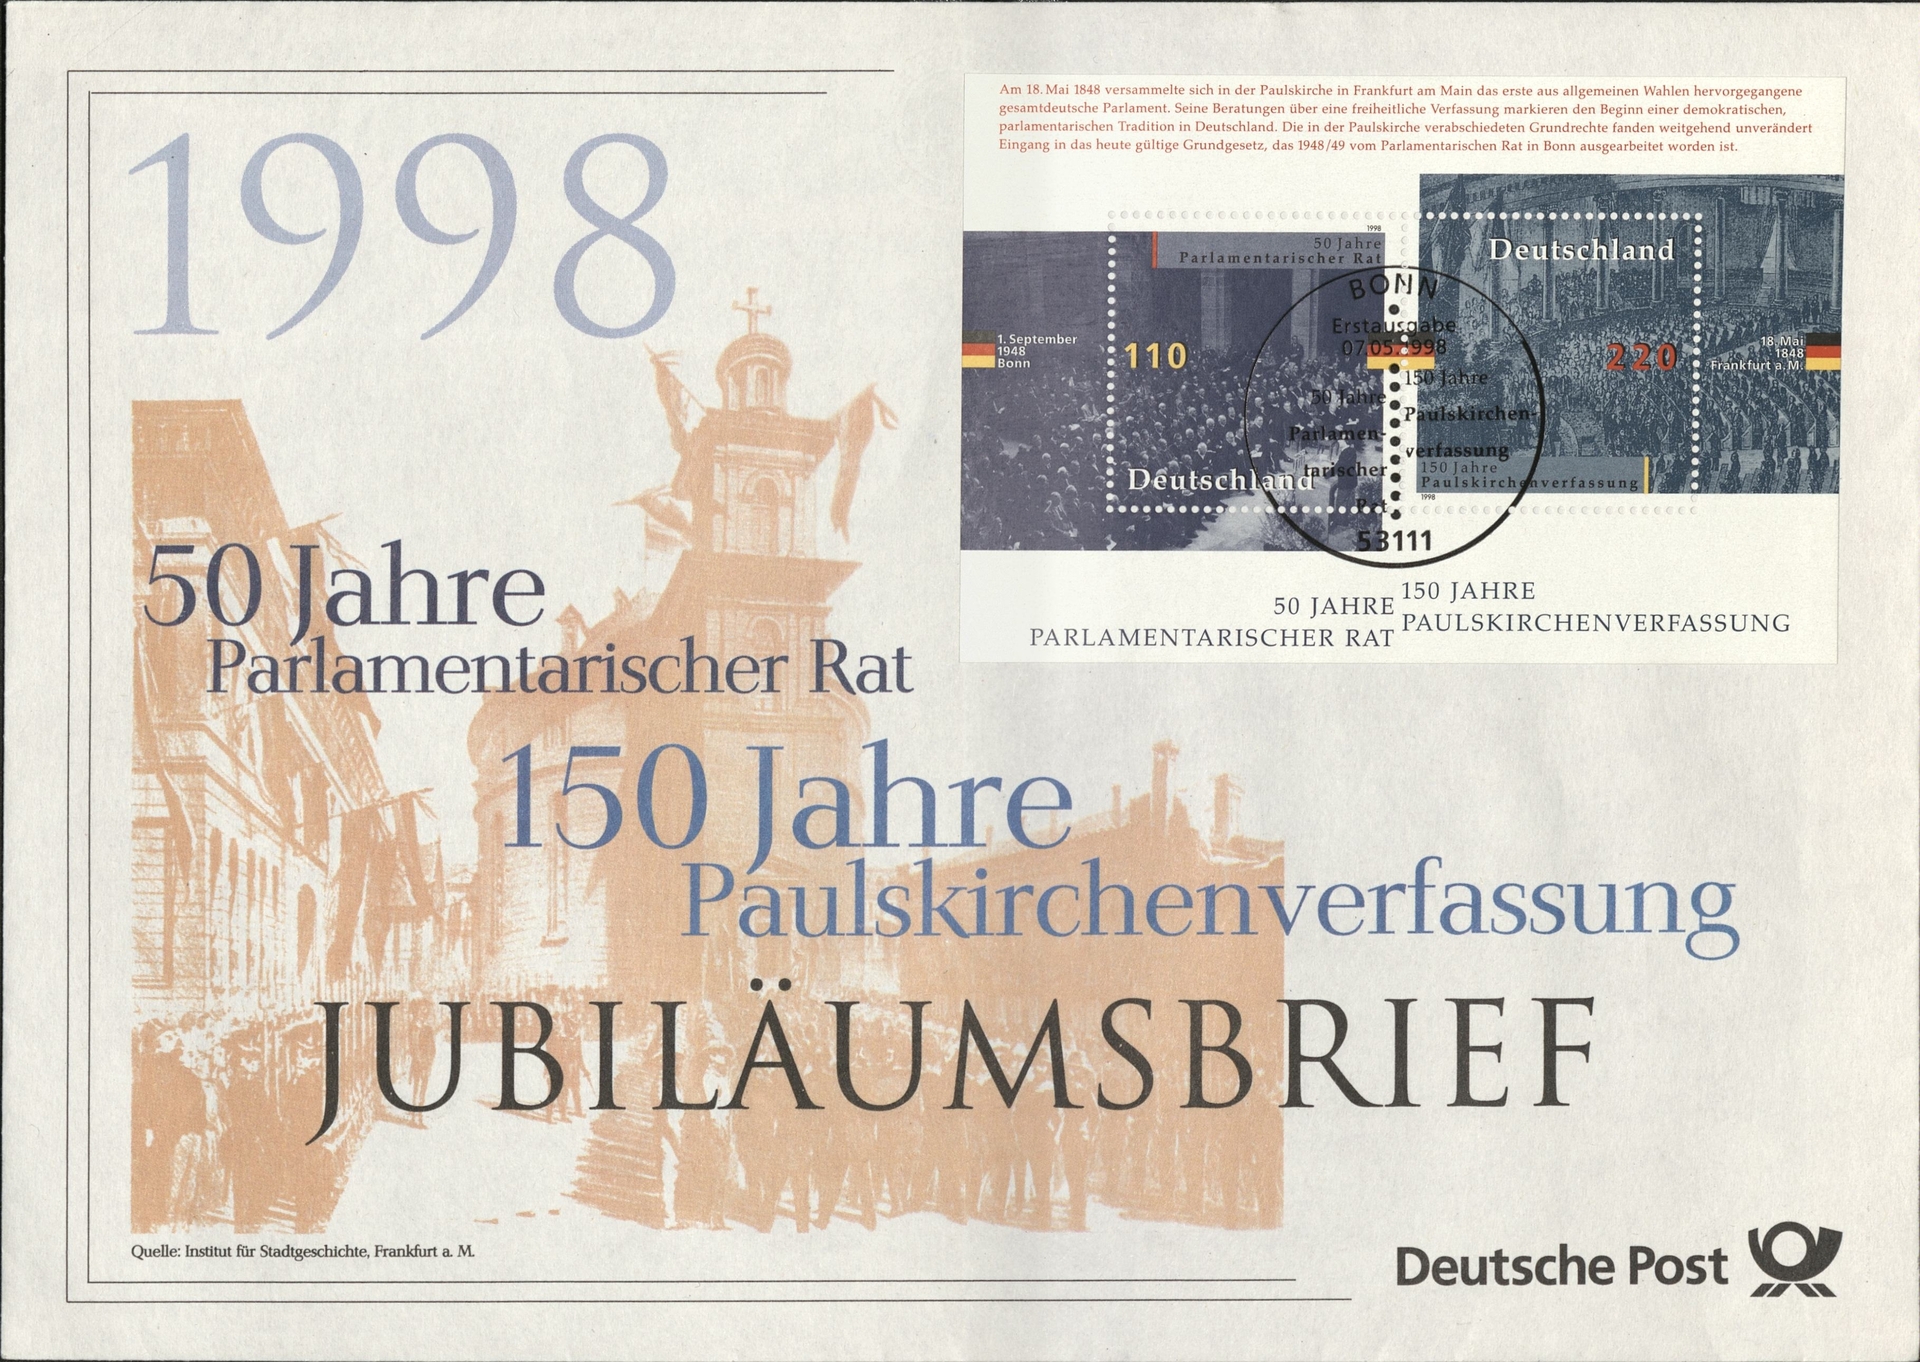 Jubiläumsbriefmarken.jpg